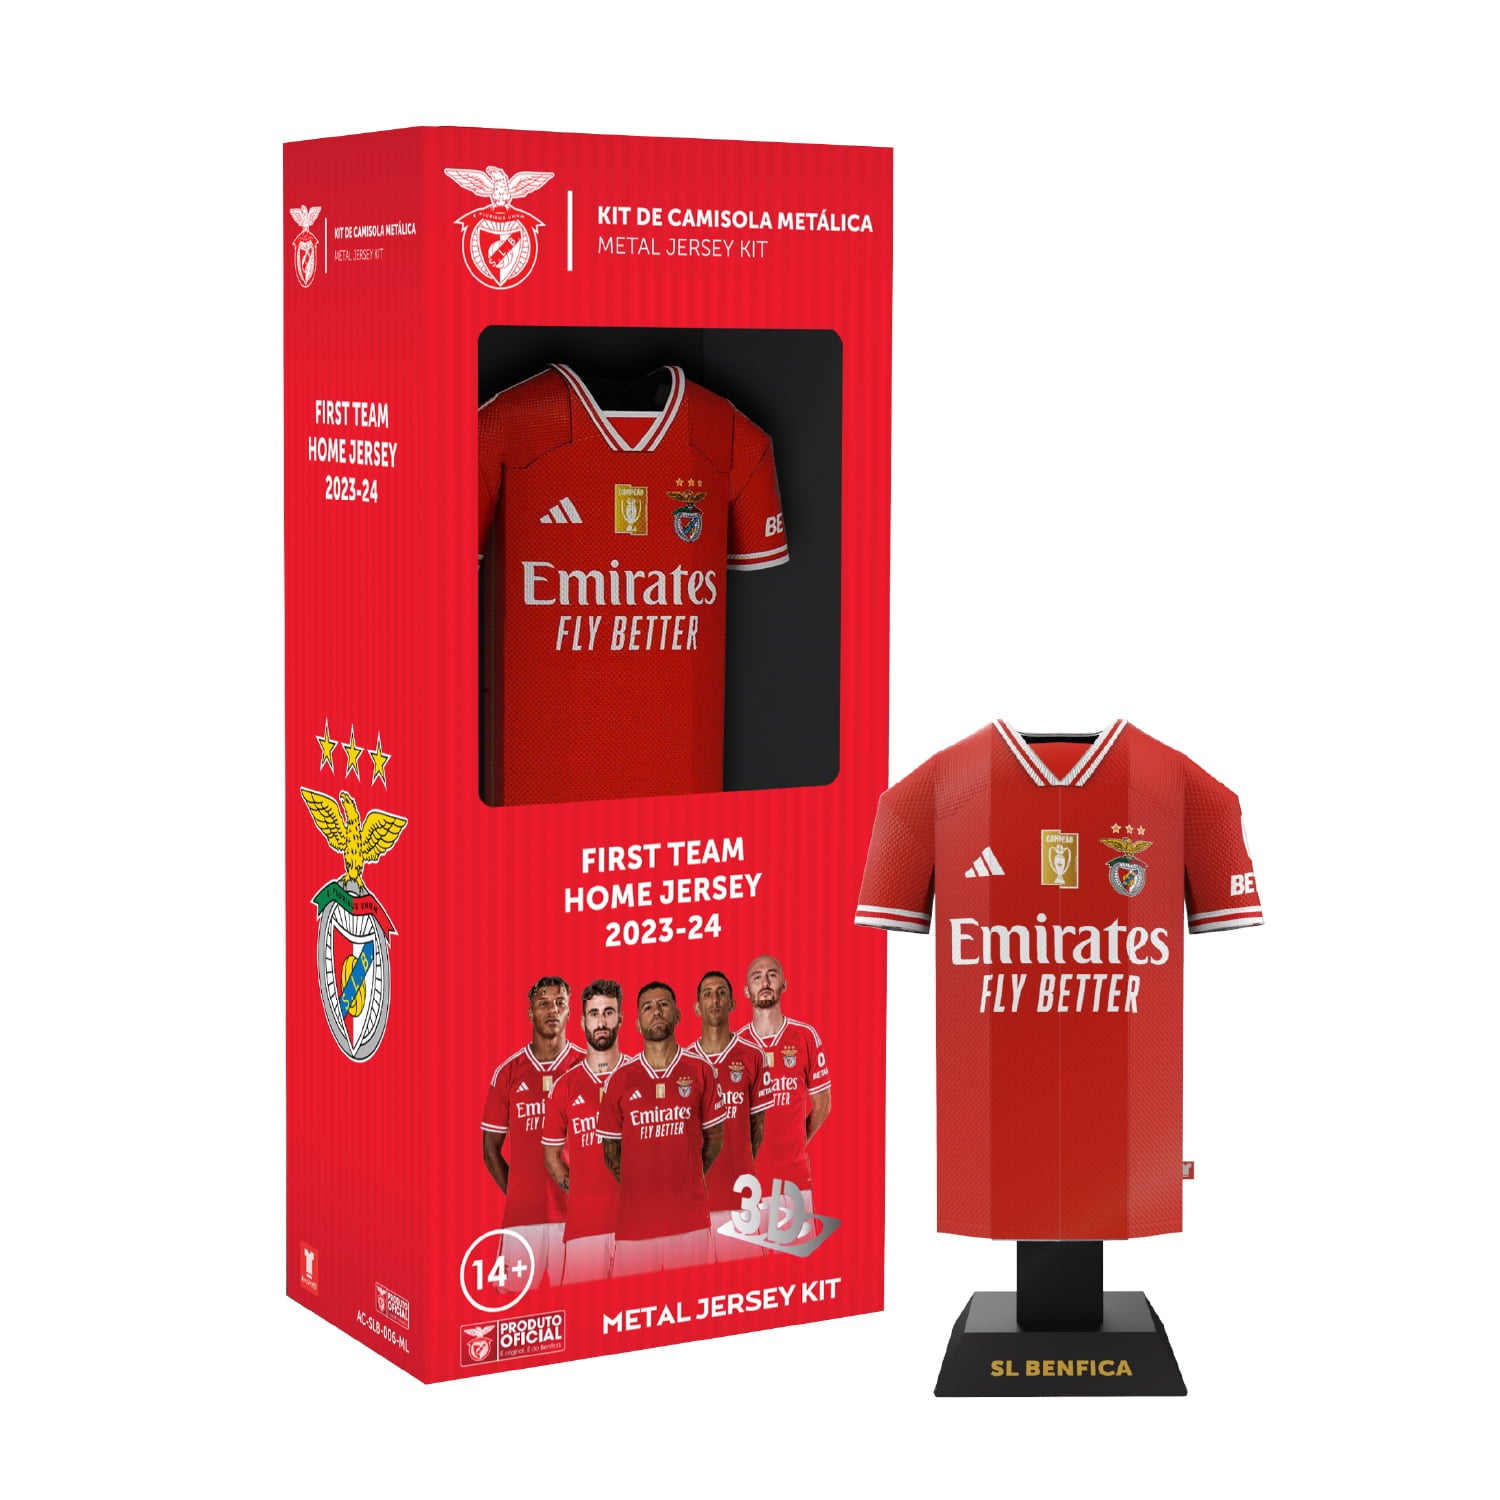 Benfica home kit in locker packaging